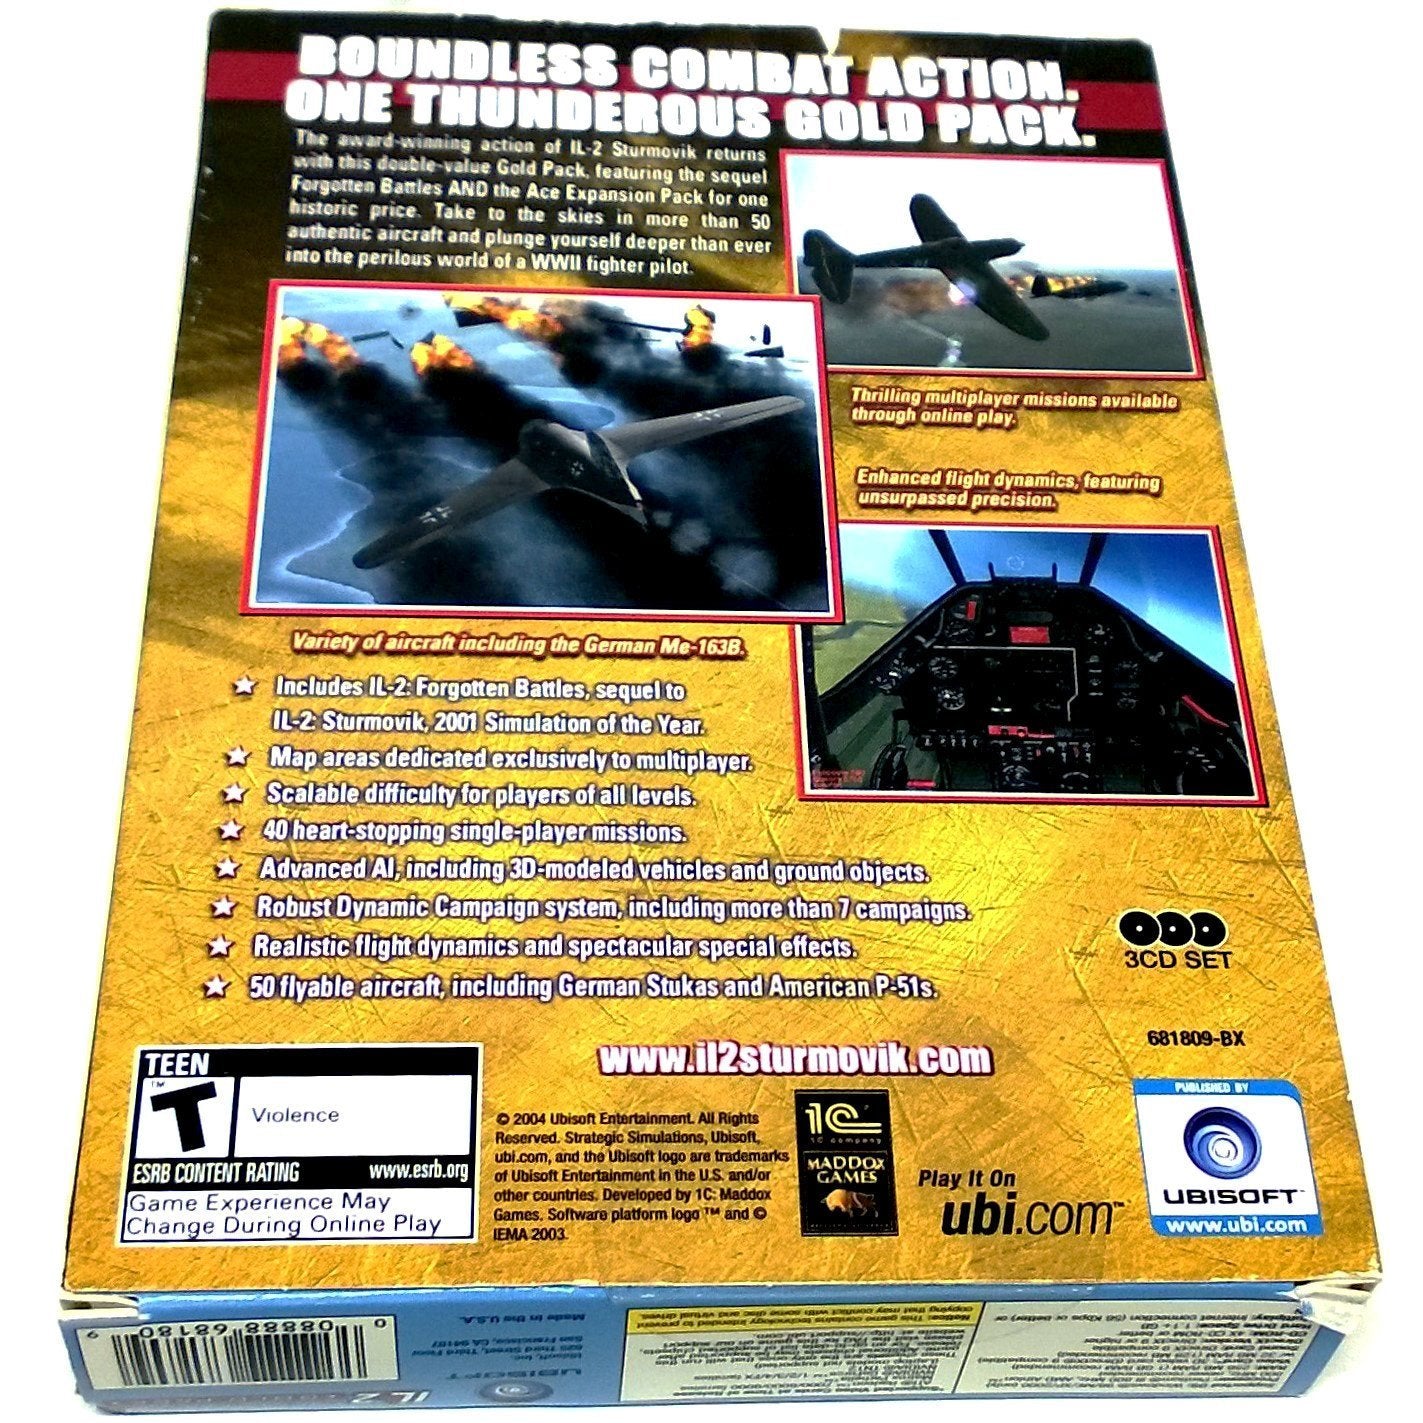 IL-2 Sturmovik: Forgotten Battles (Gold Pack Edition) for PC CD-ROM - Back of box